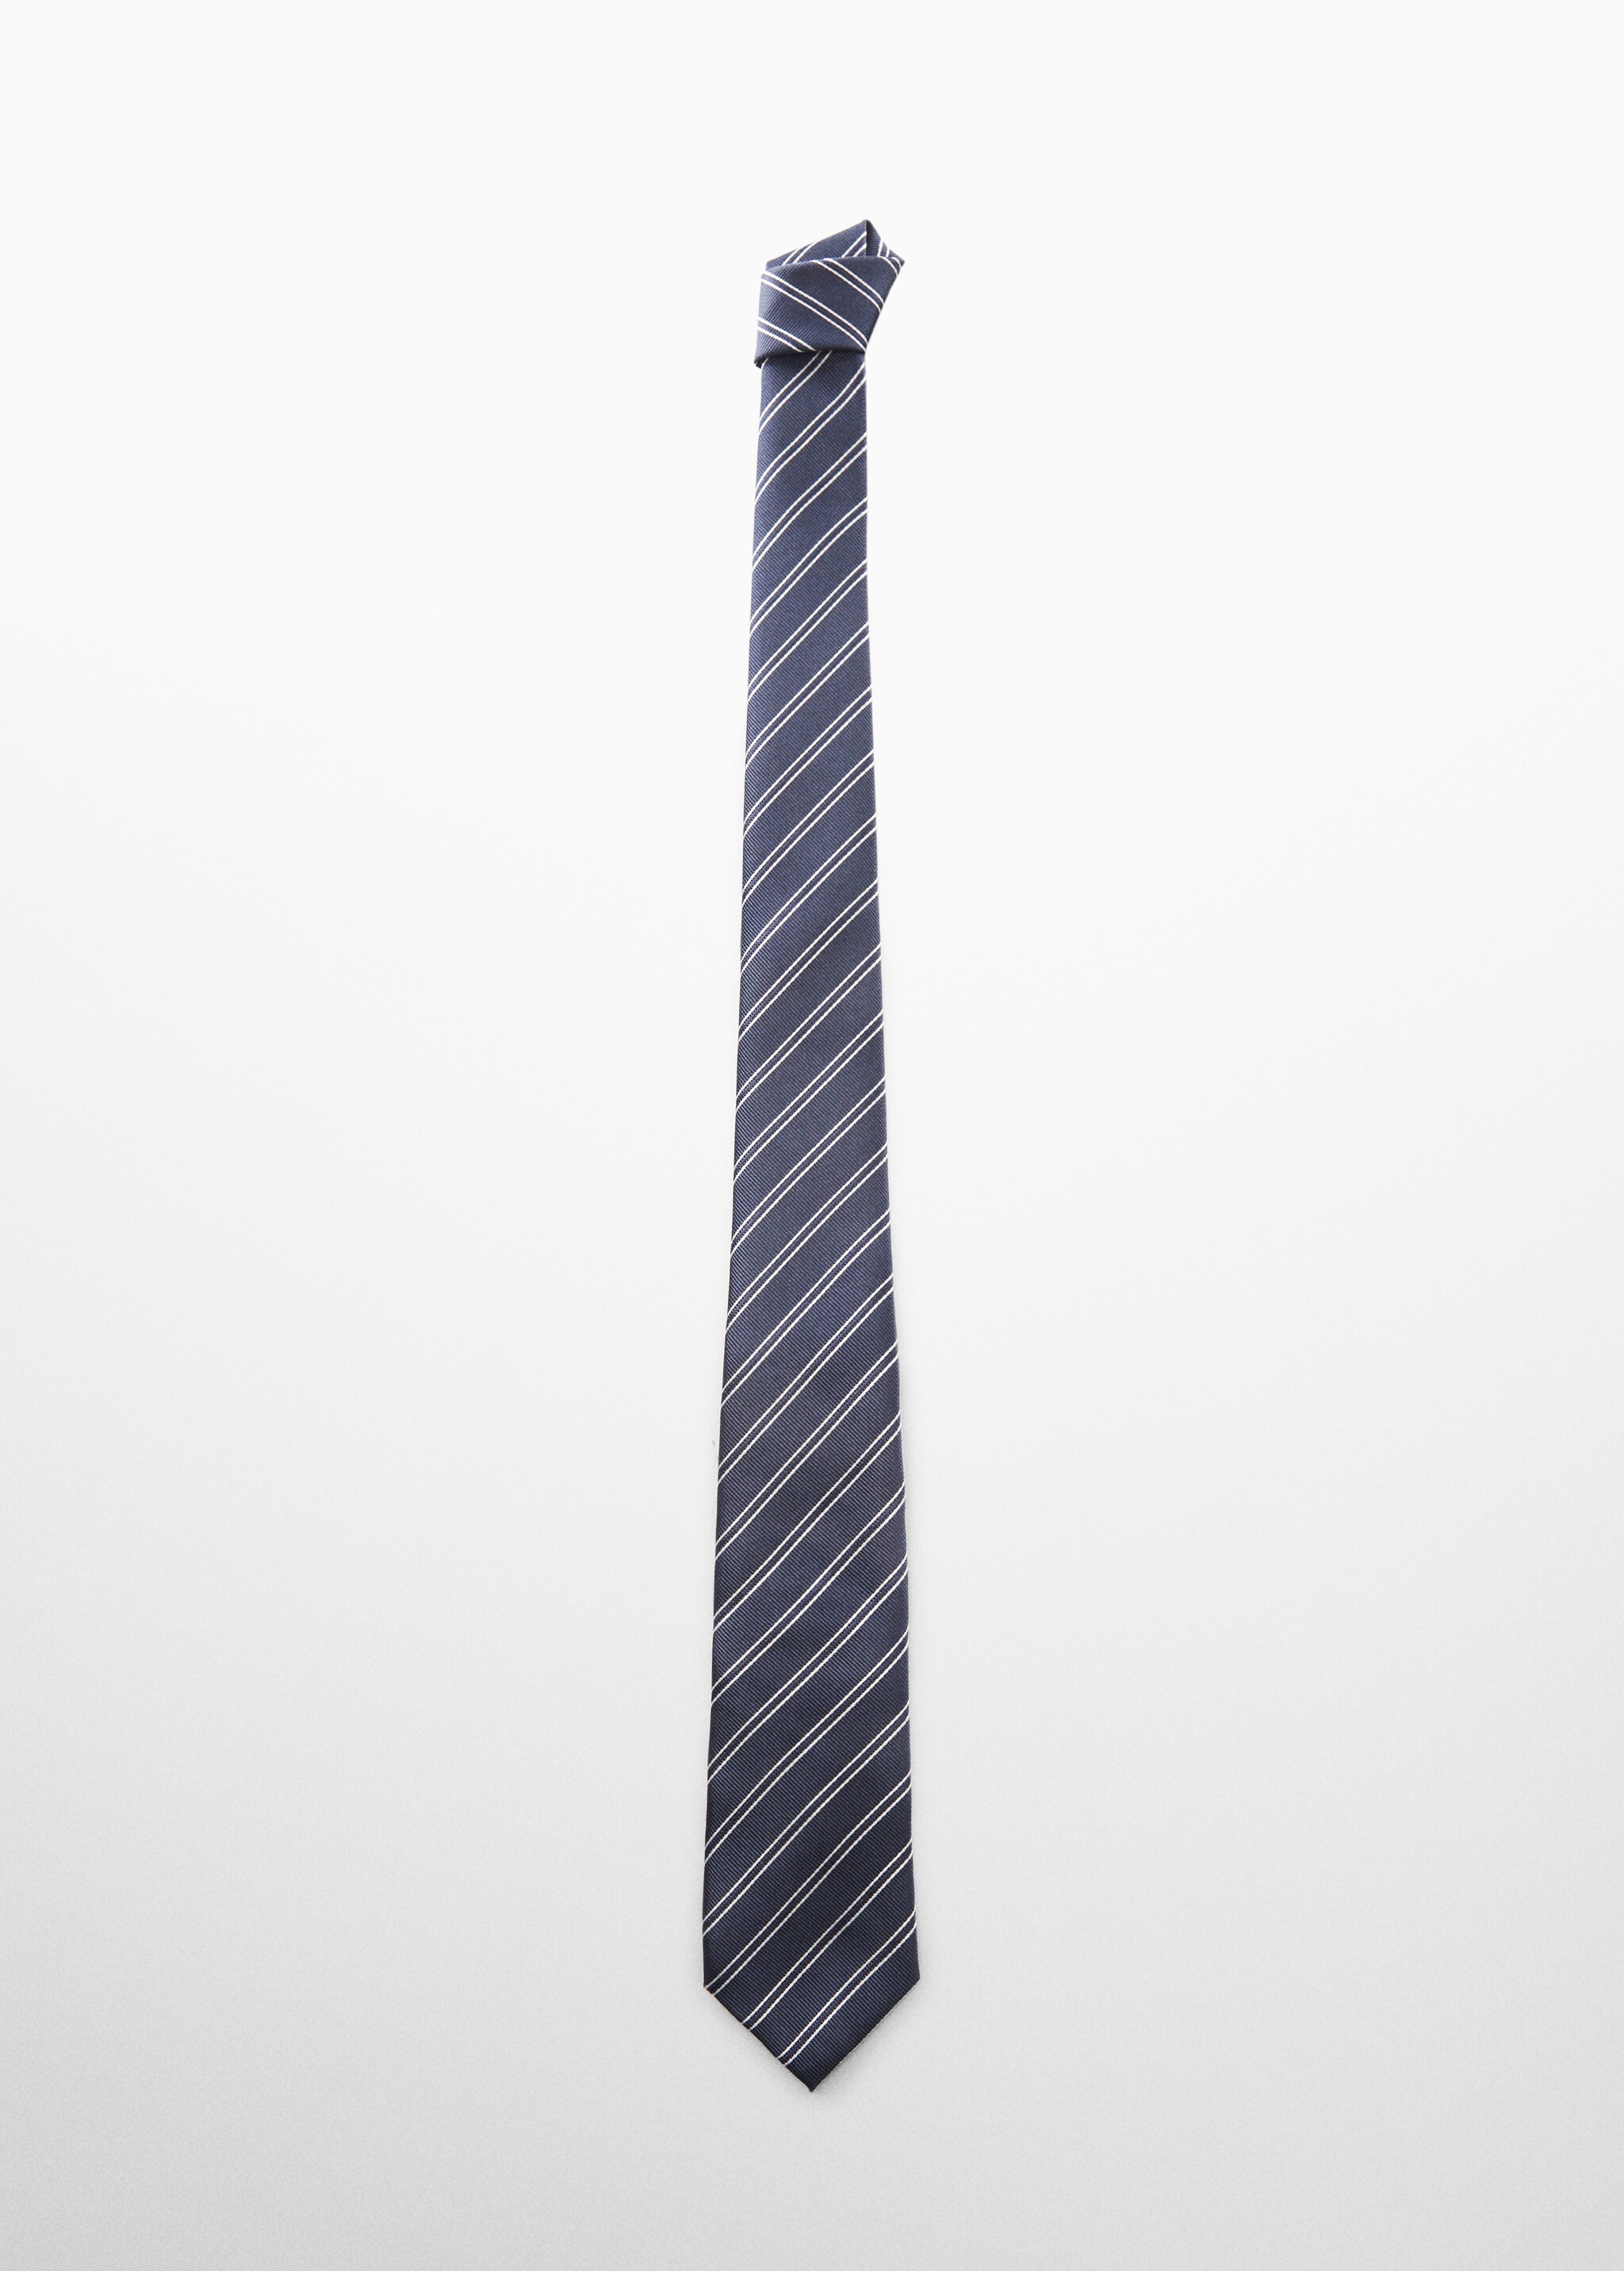 Vlekvaste gestreepte stropdas - Artikel zonder model